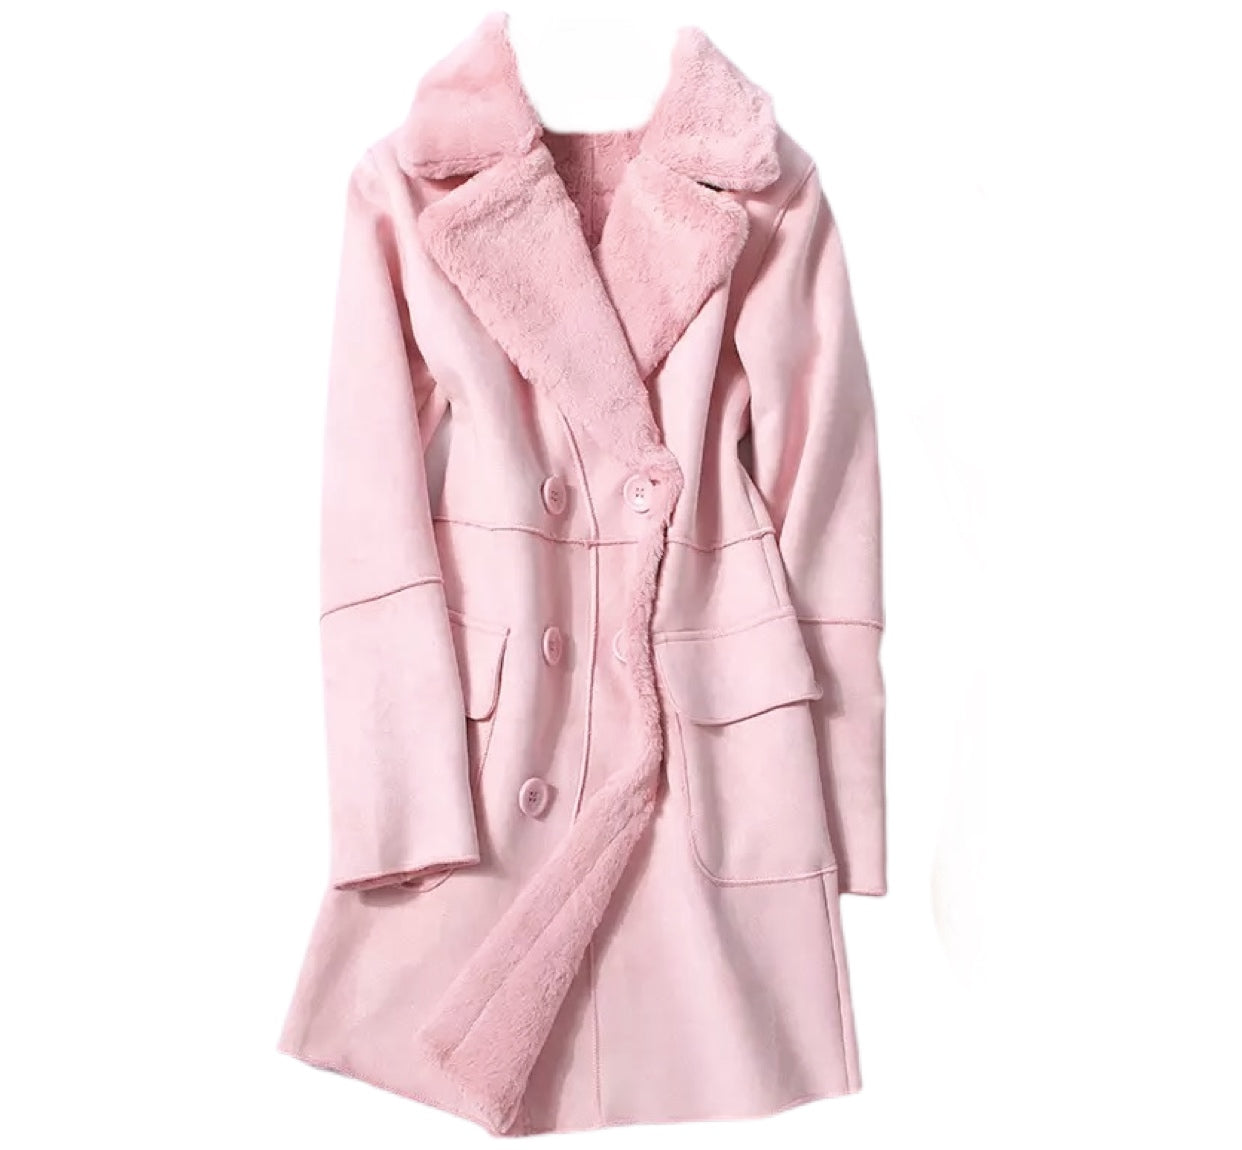 Sweetie Blush Pink Coat